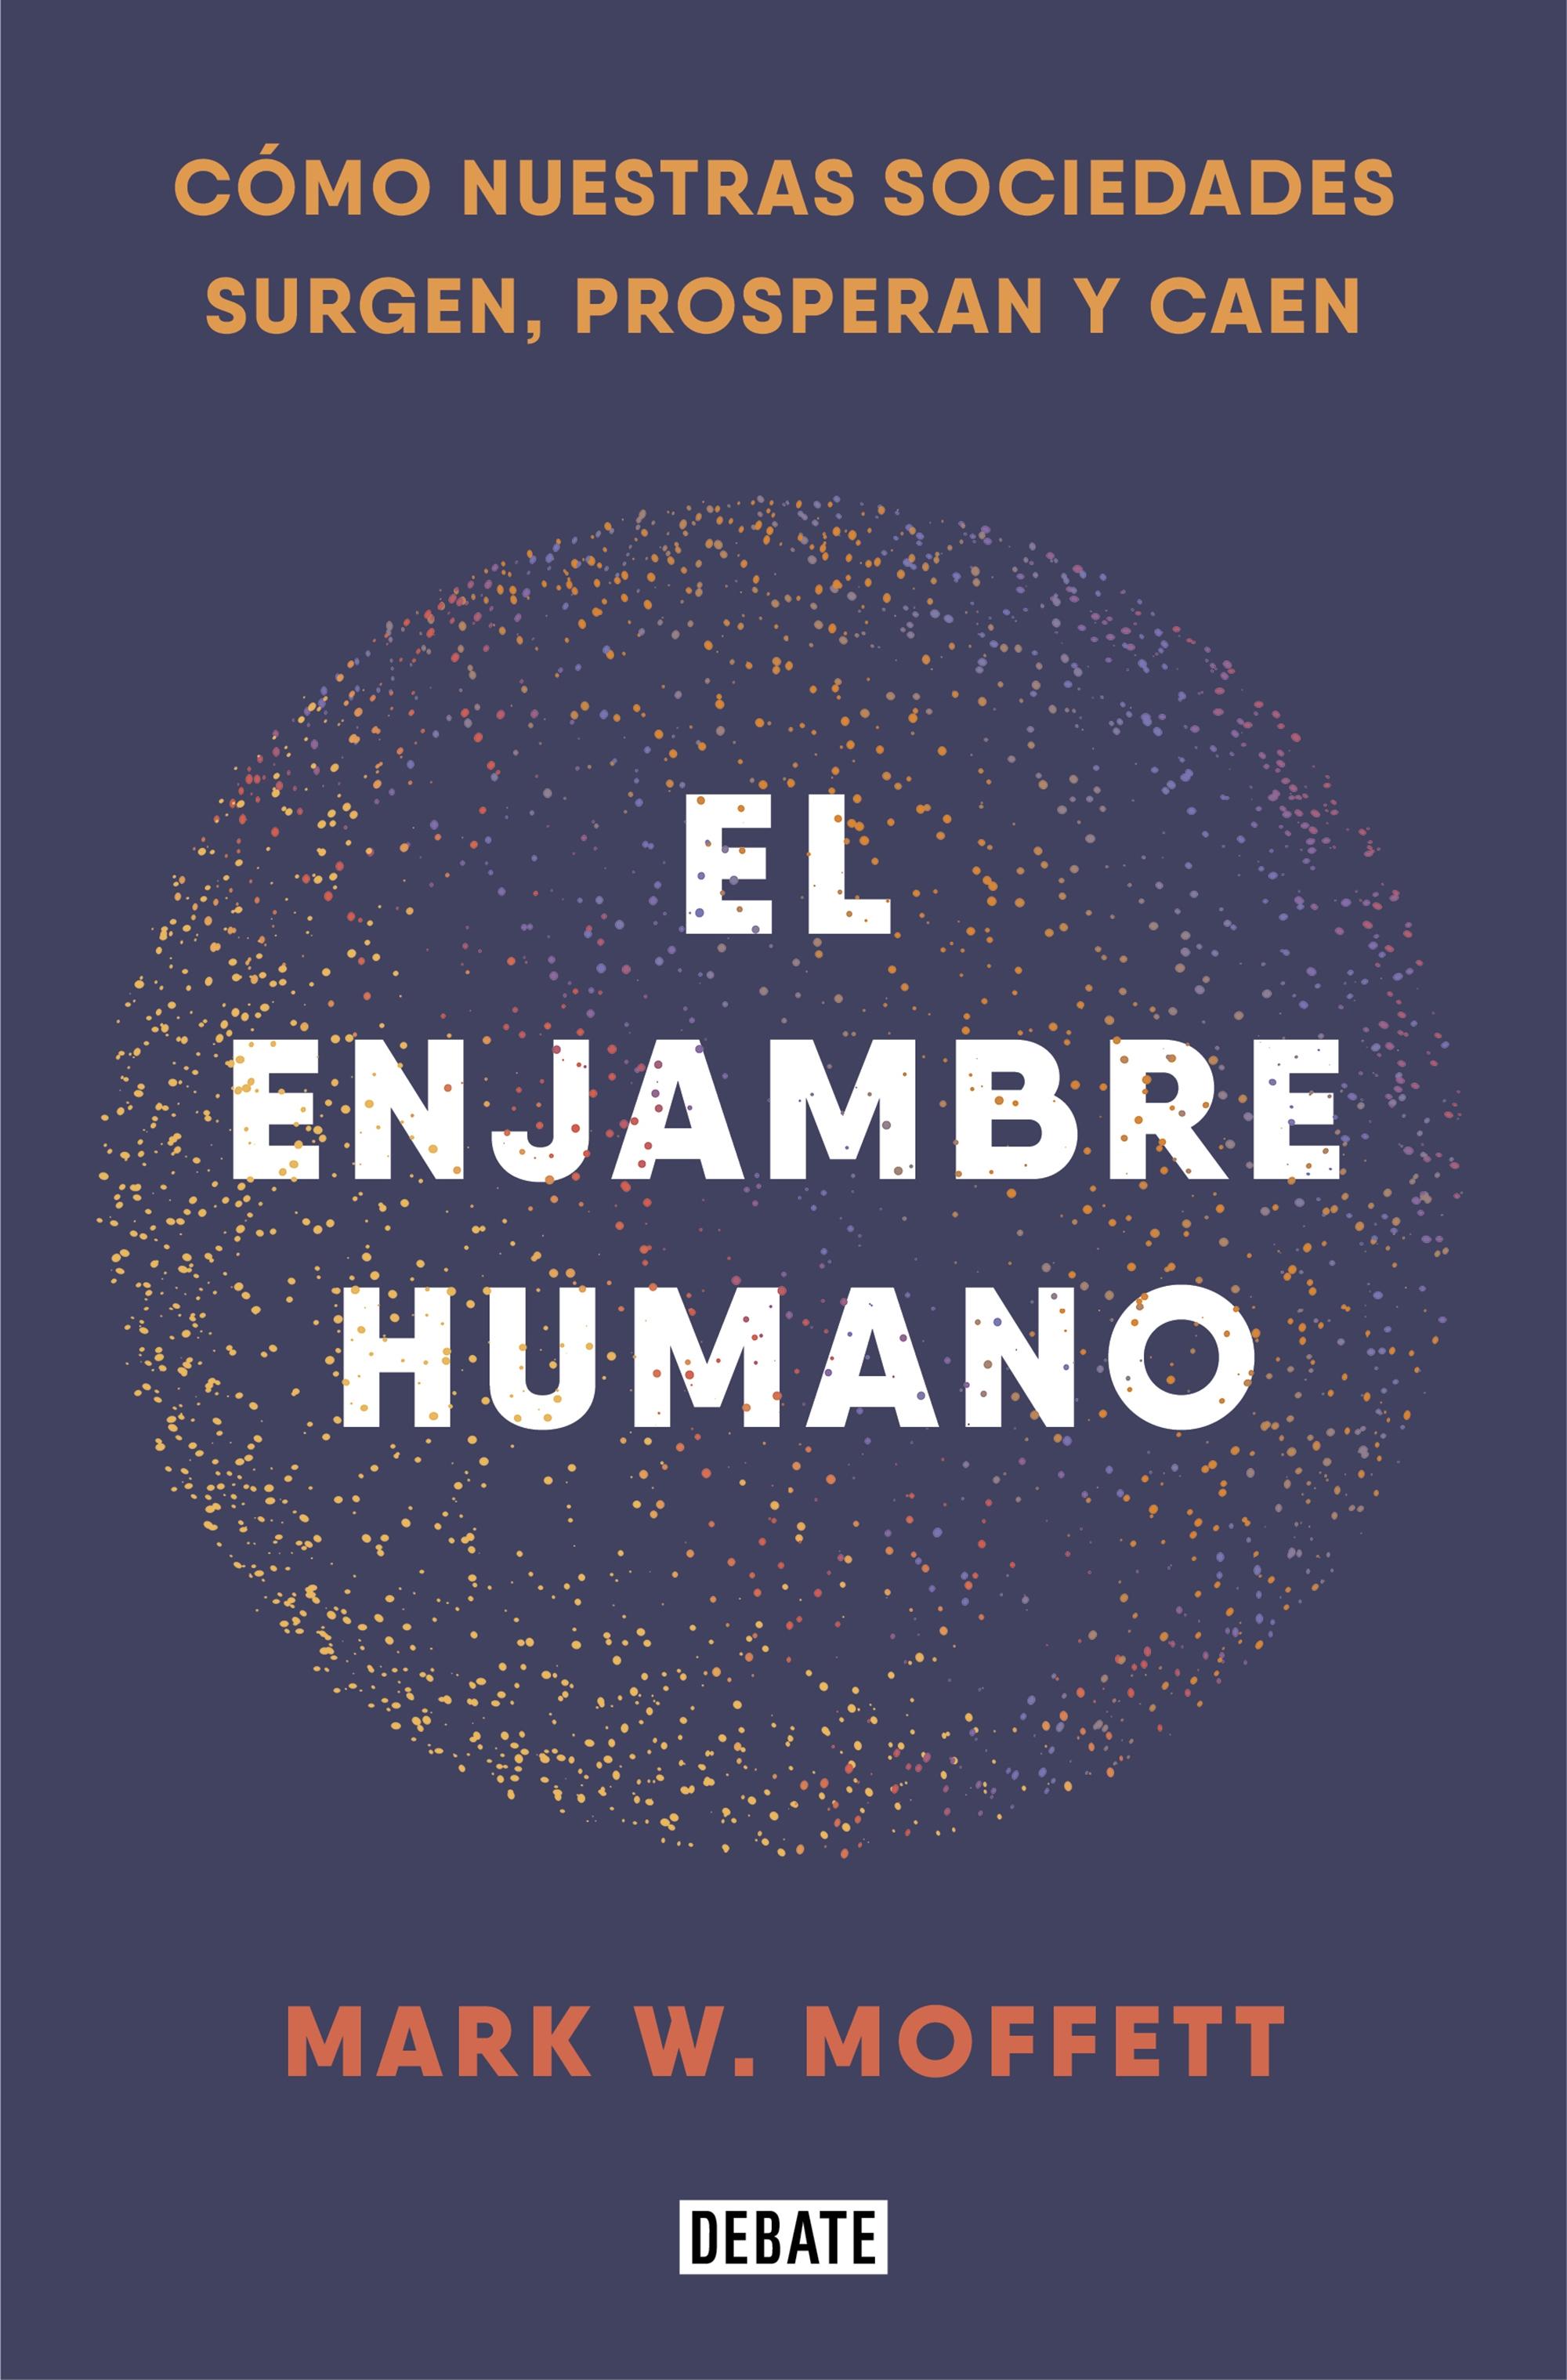 El Enjambre Humano "How Societies Arise, Thrive, And Fail". 